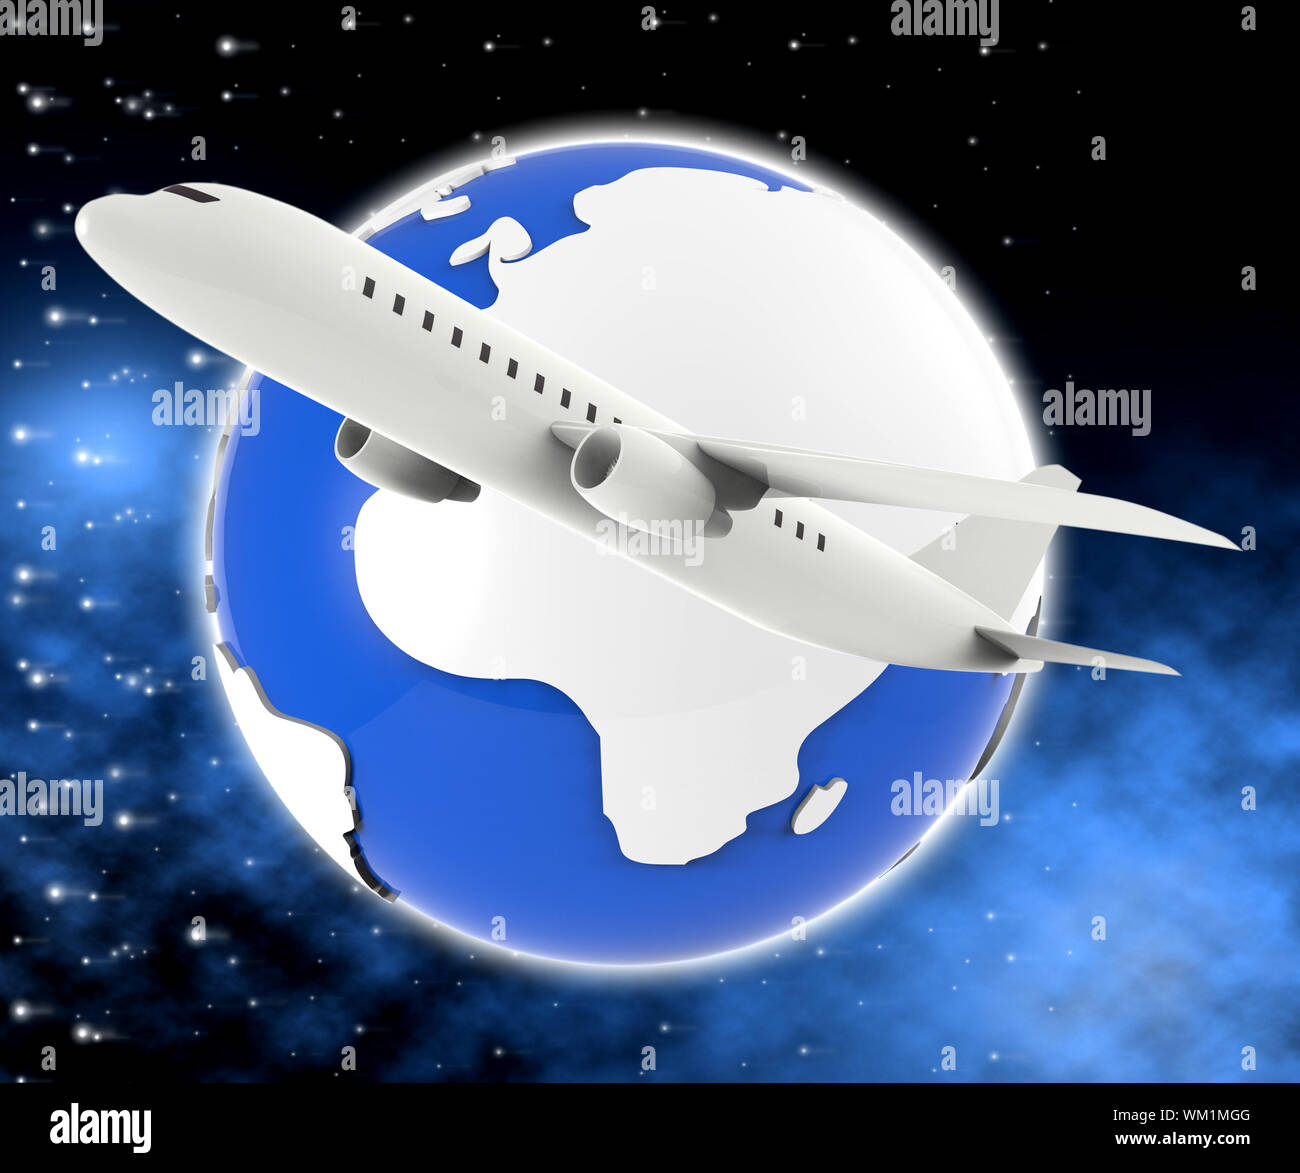 World Plane Representing Roam Travels And Tours Stock Photo